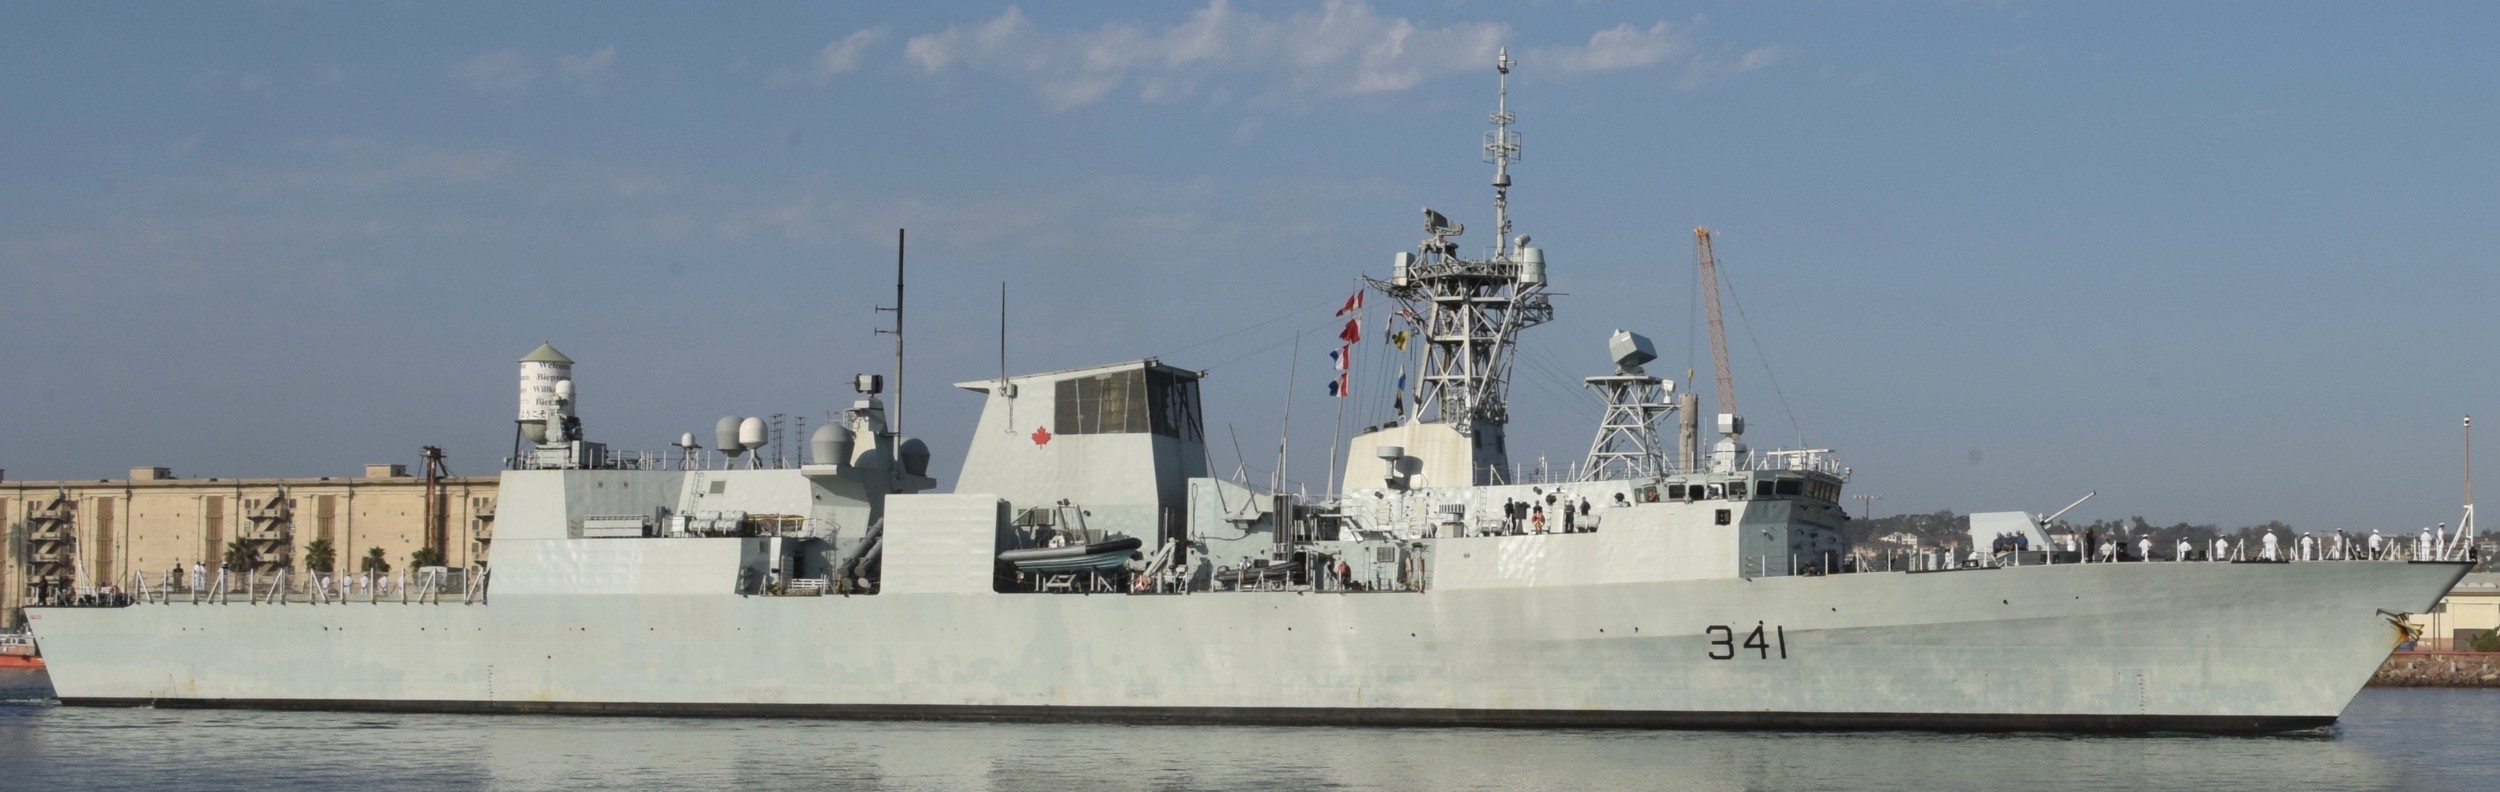 ffh-441 hmcs ottawa halifax class helicopter patrol frigate ncsm royal canadian navy 10